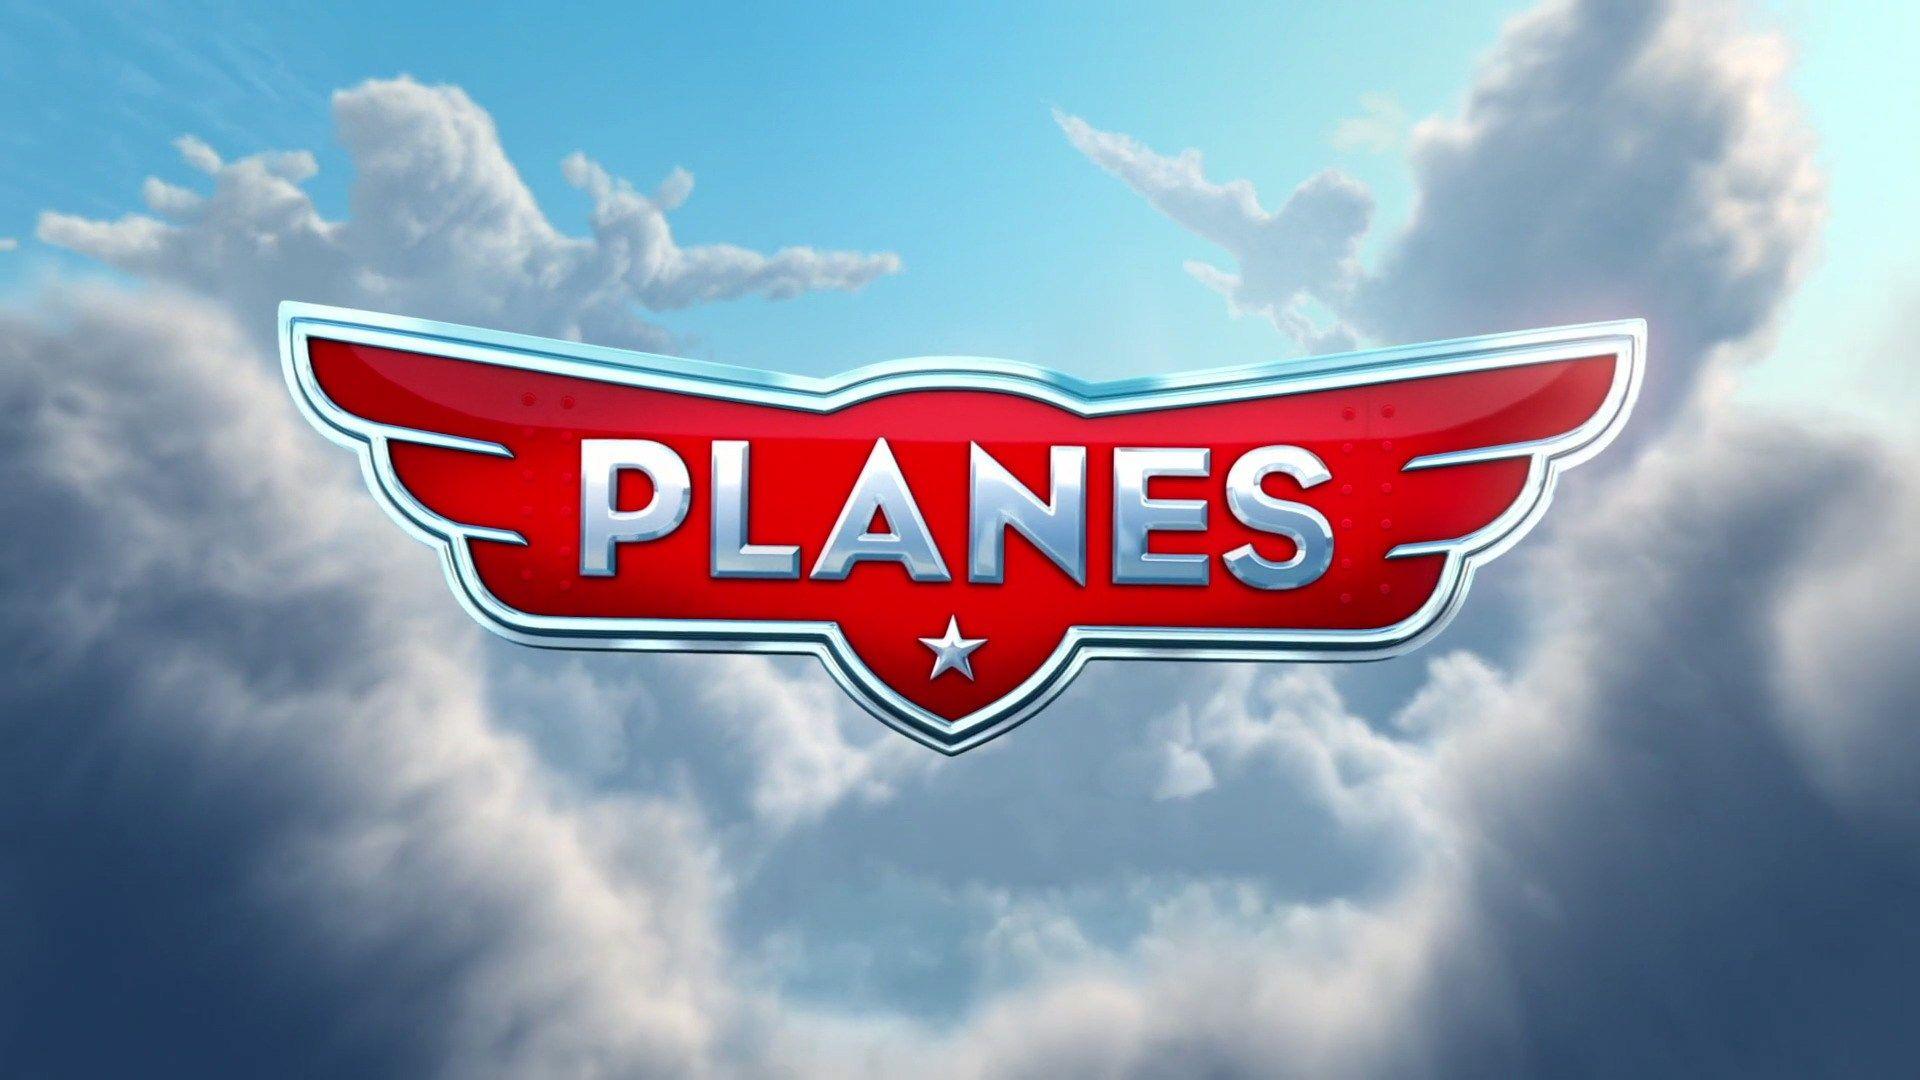 Disney Planes Movie Logo - Planes (2013)